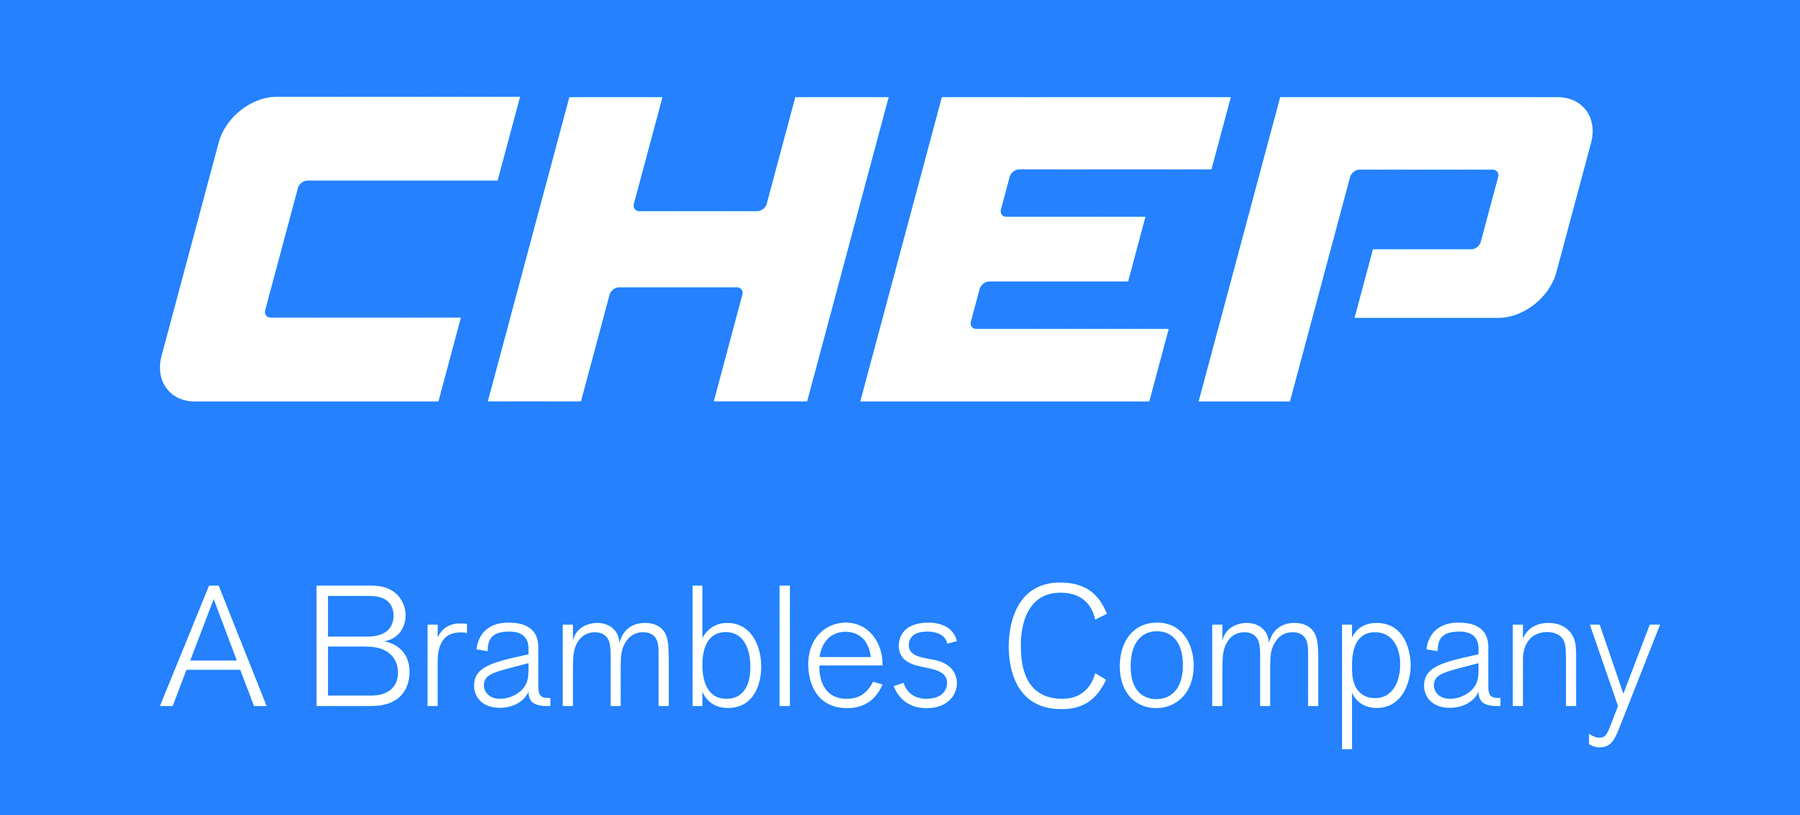 CHEP_LogoBrambles_2016_WhiteOnBlue.jpg